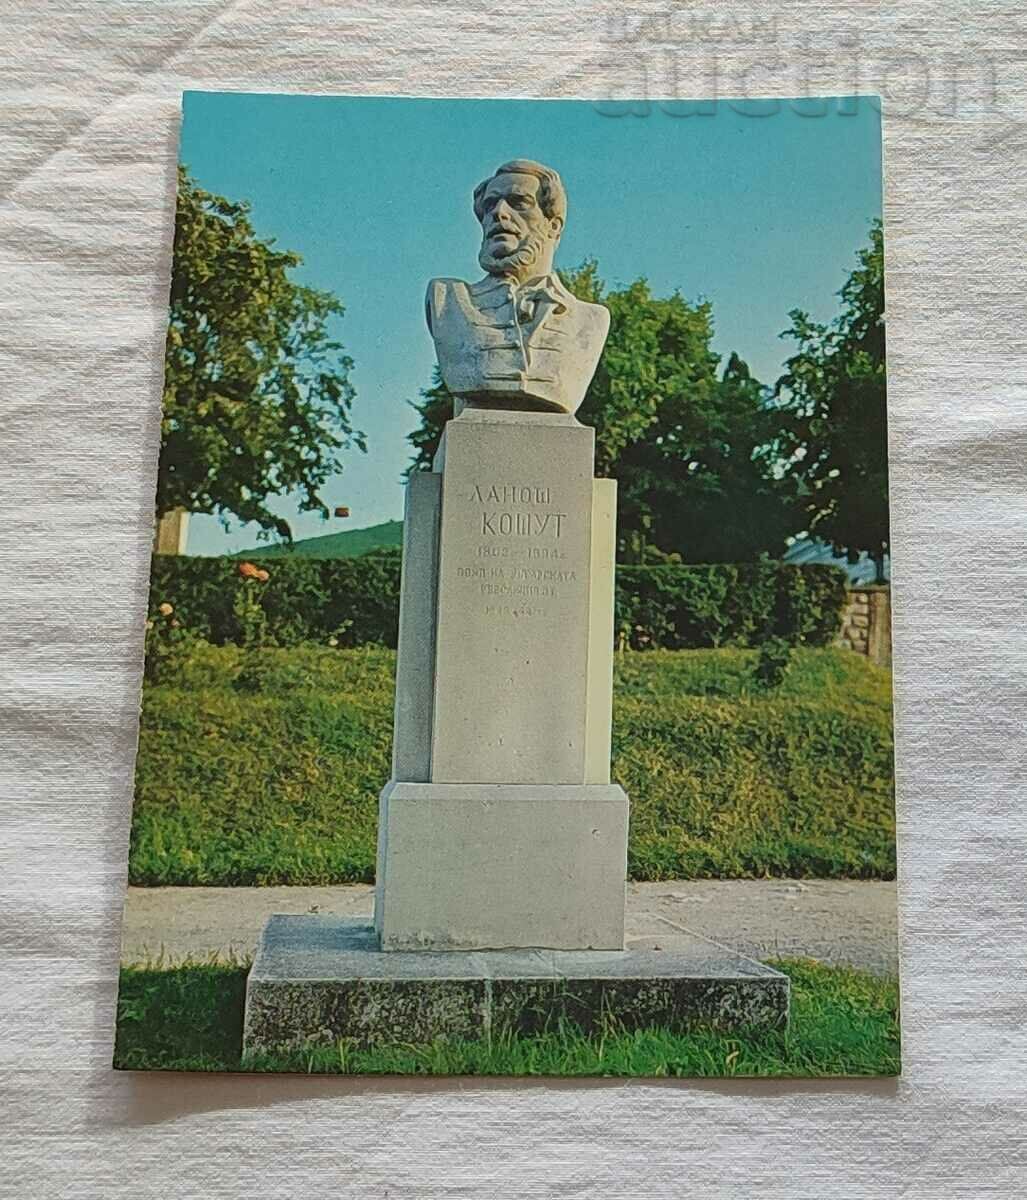 SHUMEN MONUMENTUL LAJOS KOSHUT 1979 P.K.